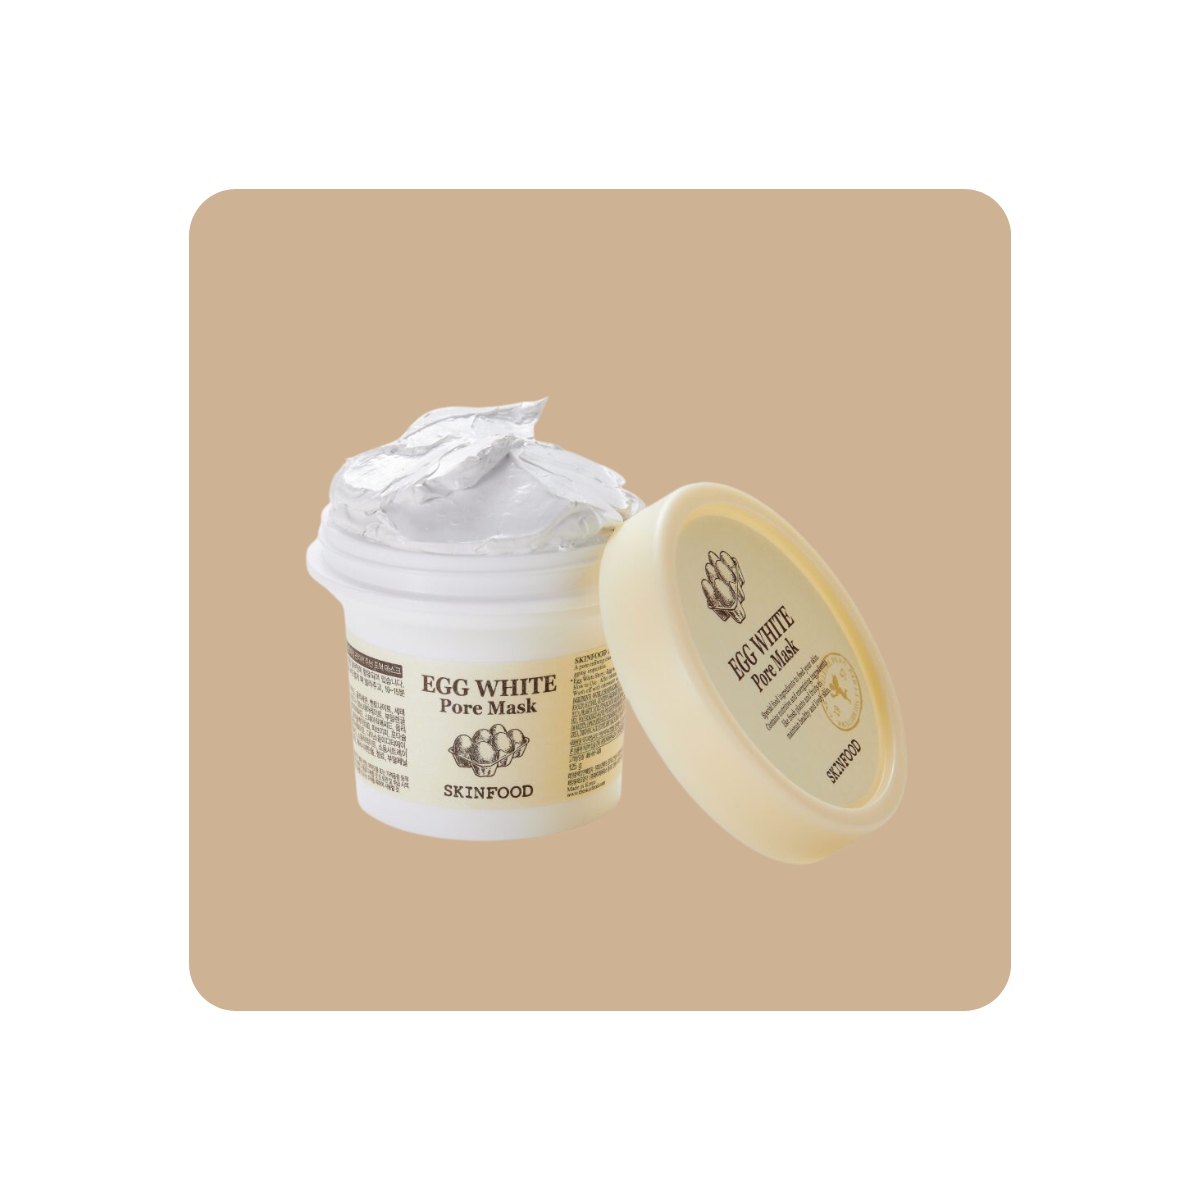 Mascarillas Wash-Off al mejor precio: Mascarilla Anti Puntos Negros Skinfood Egg White Pore Mask de SKINFOOD en Skin Thinks - Piel Sensible